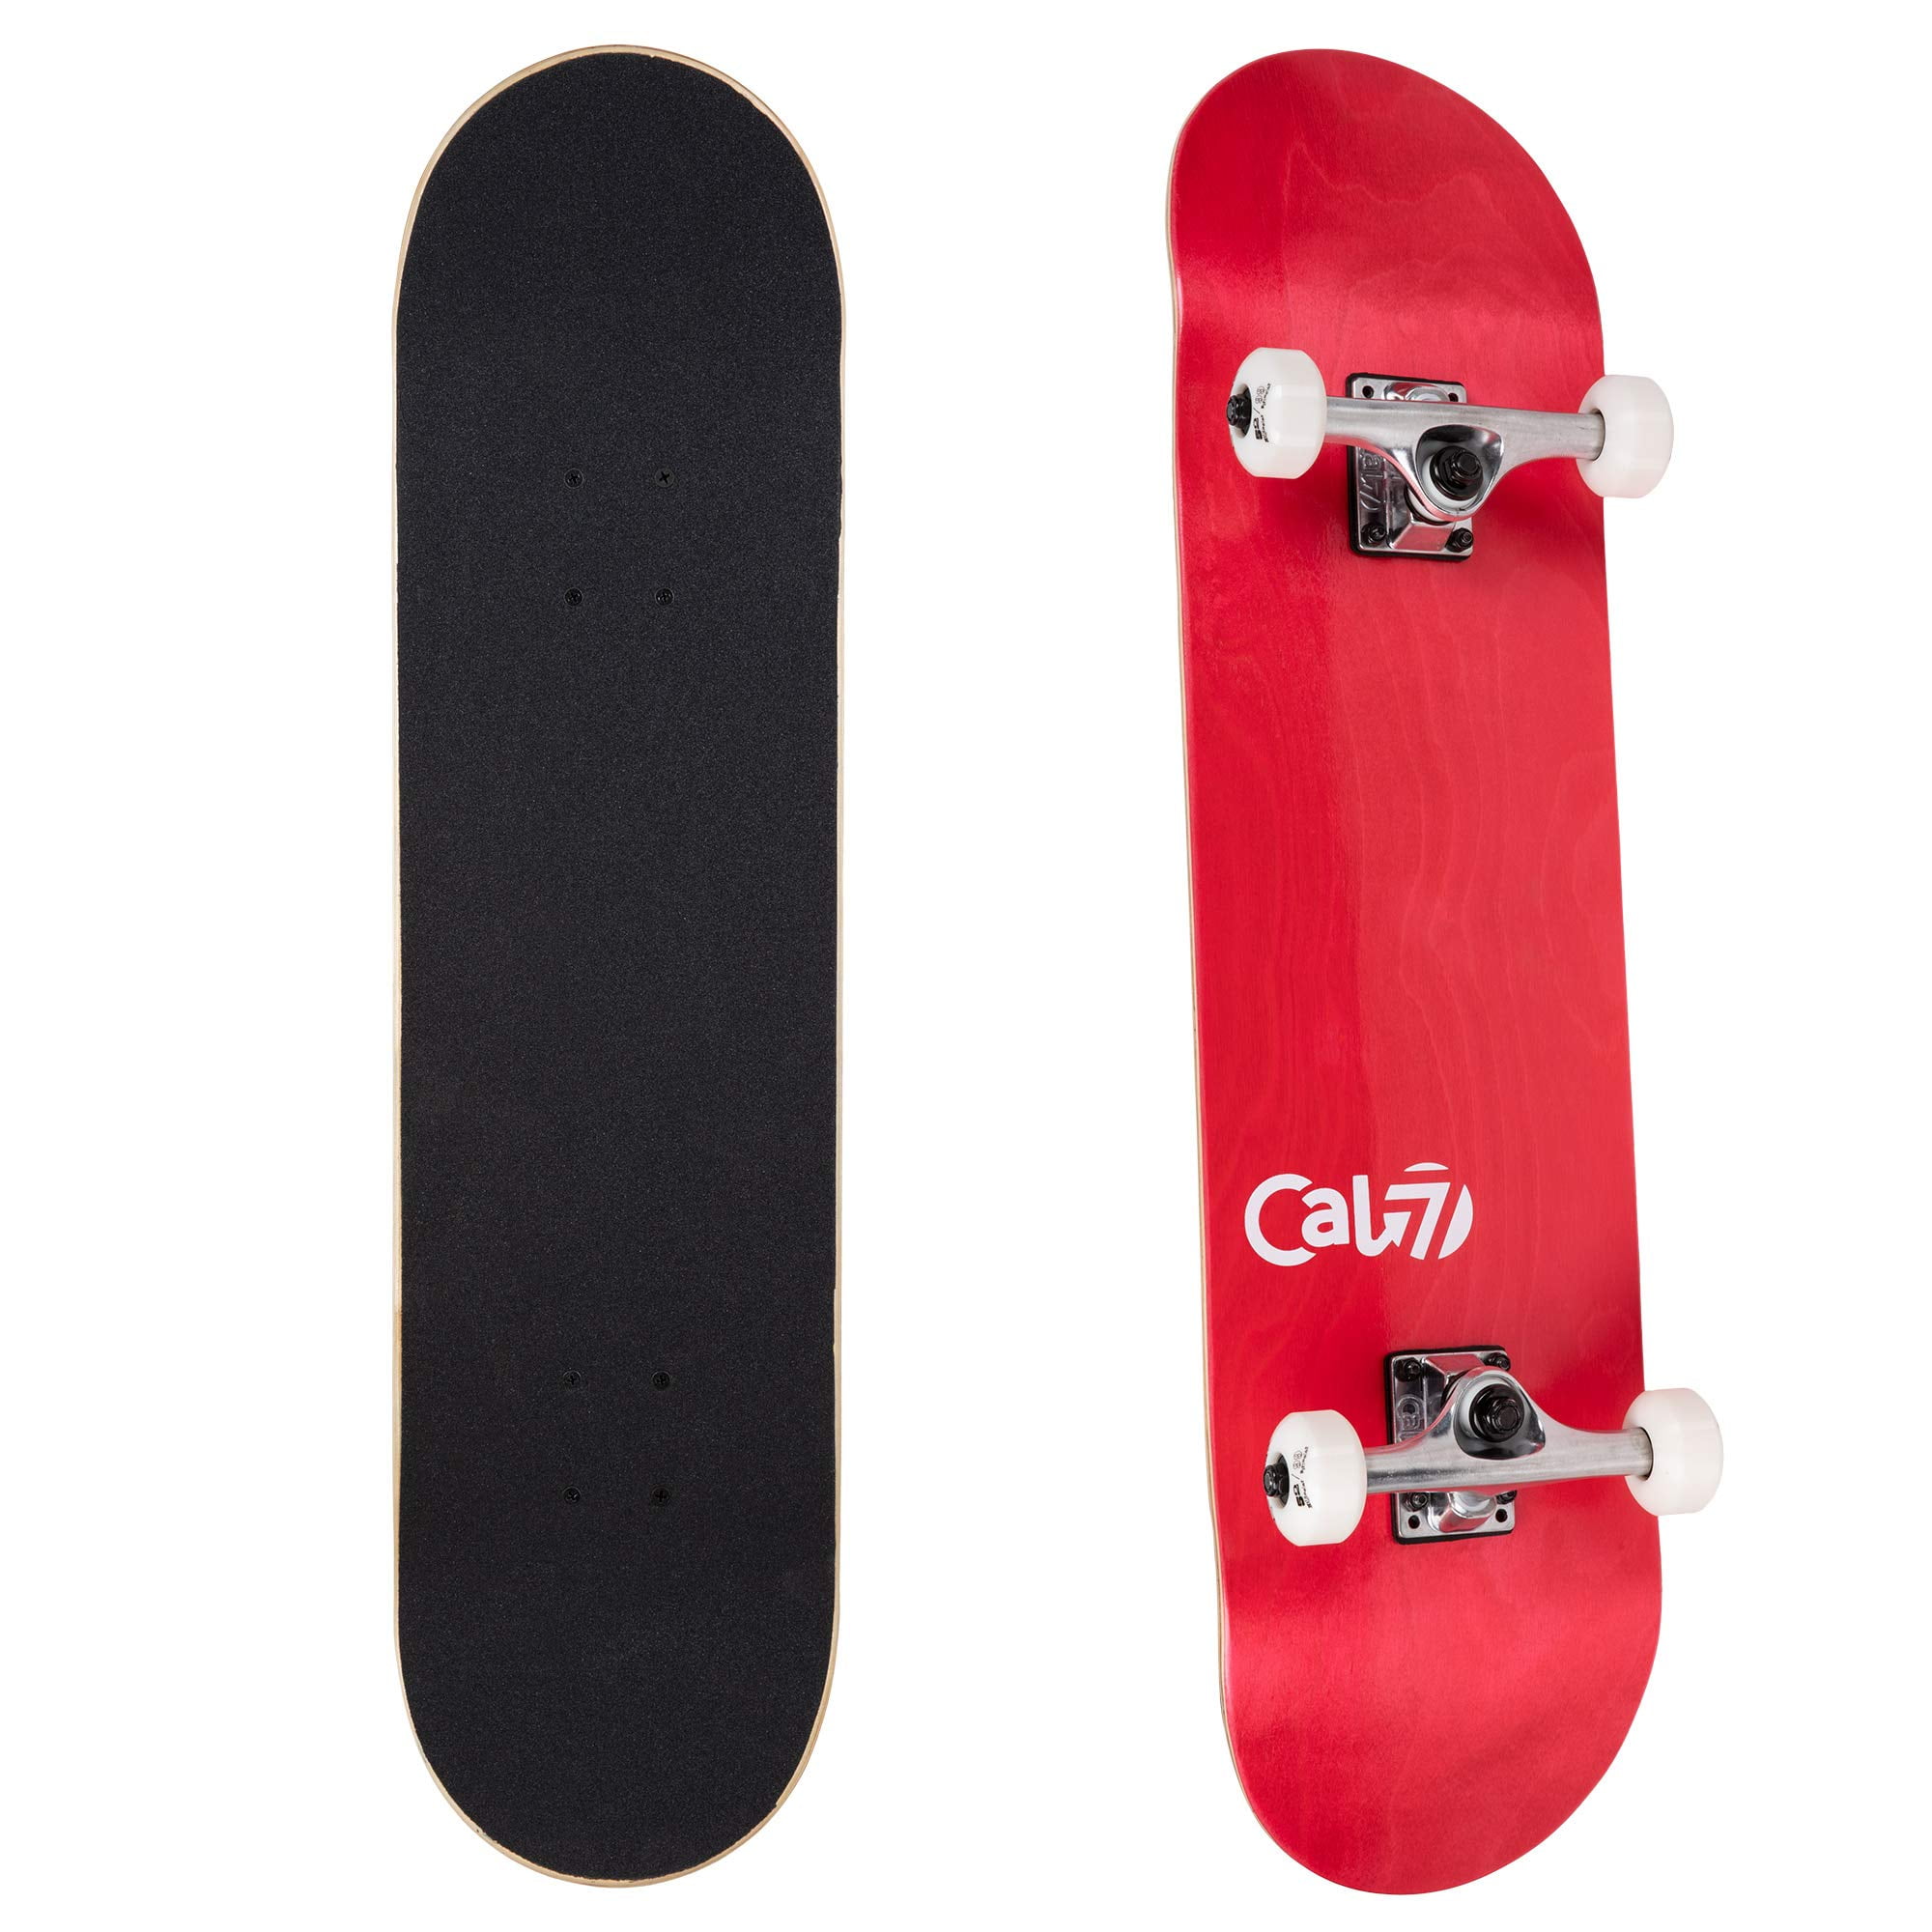 Cal 7 Complete 8.0 Inch Skateboard, Gifts for Skateboarders (Crimson)